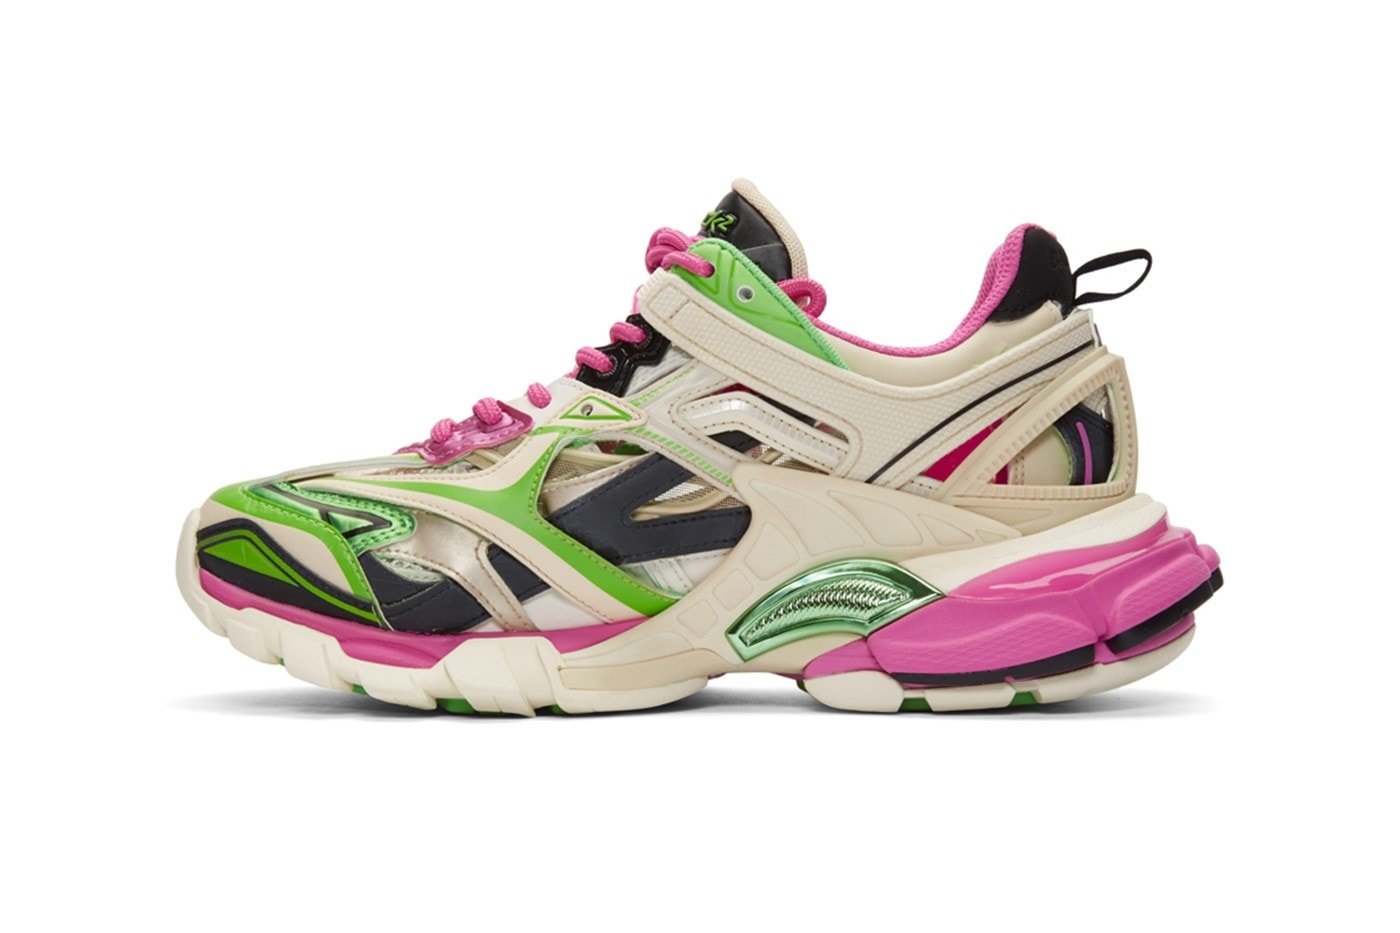 Balenciaga Track.2 Sneaker Pink White Green Caging Futuristic Trainer Shoe Layered Design Colorway